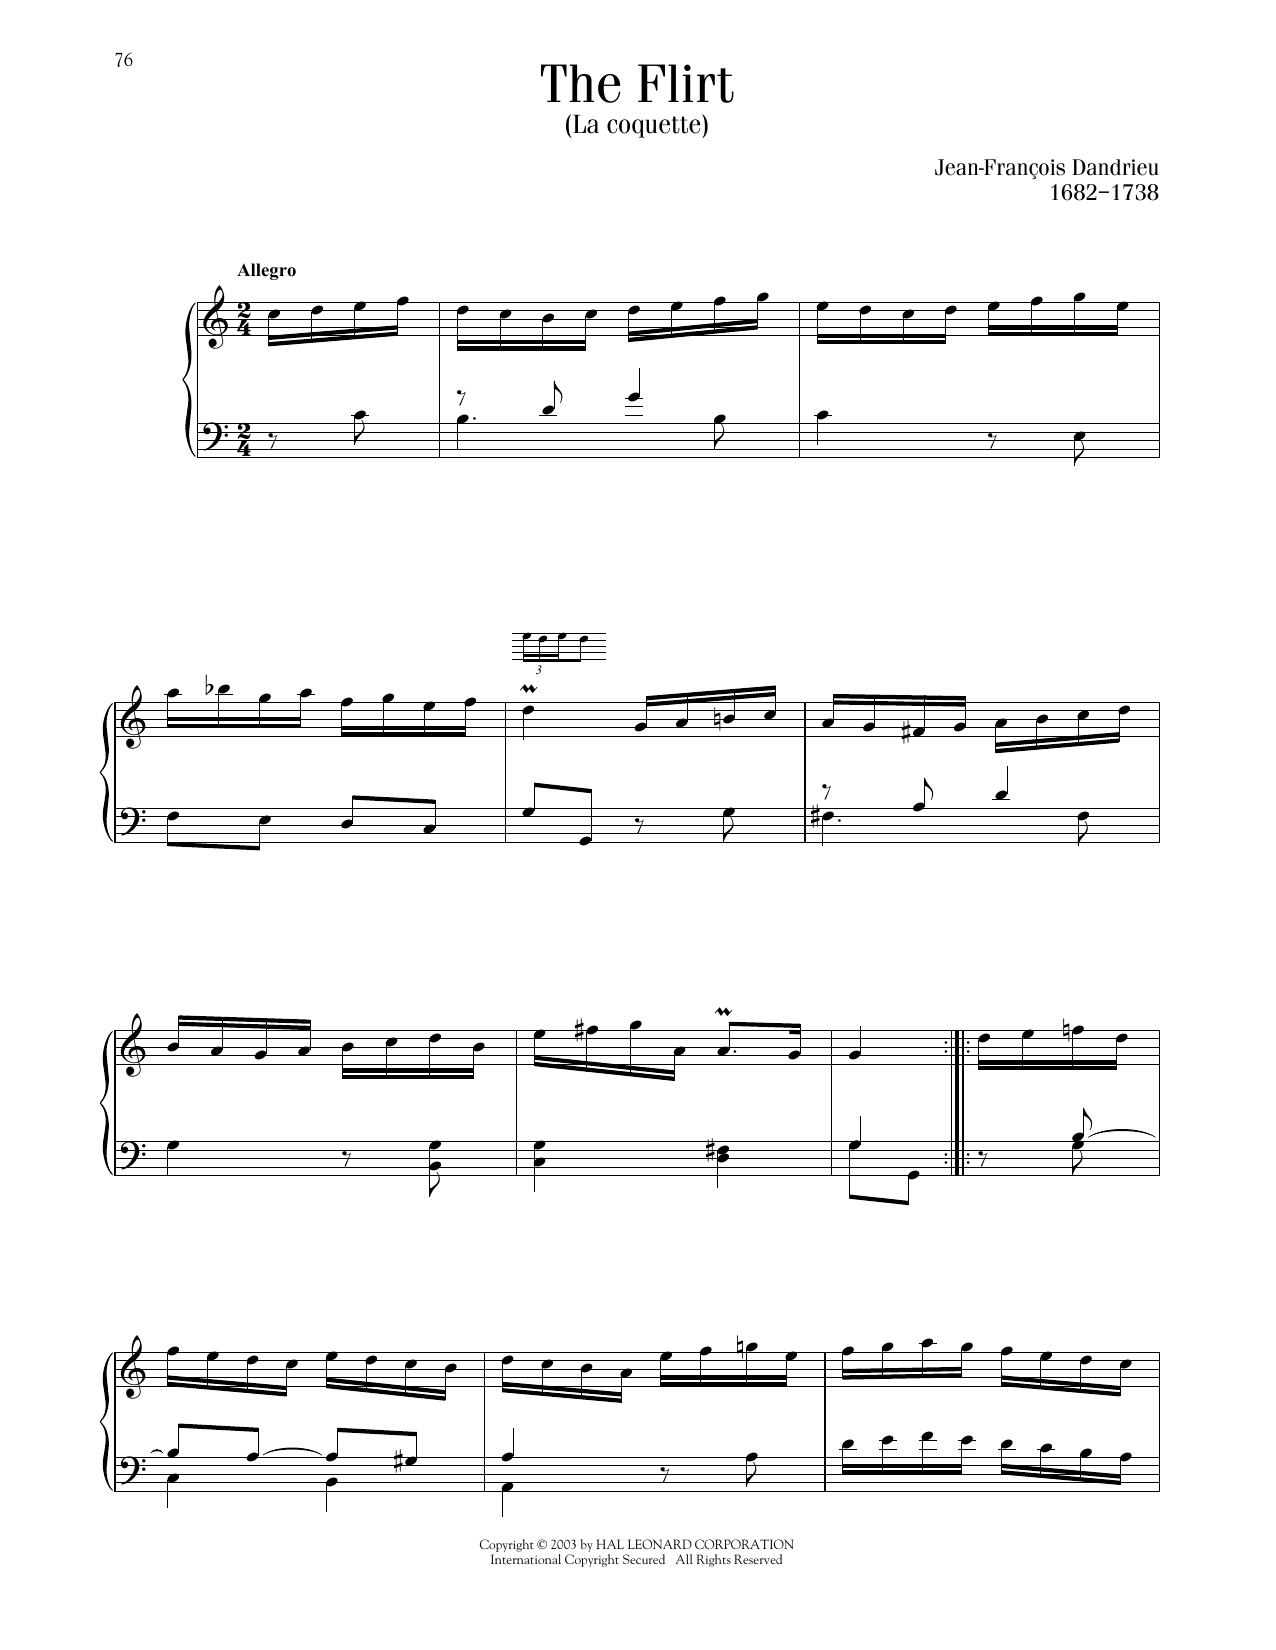 Jean-Francois Dandrieu La Coquette (The Flirt) Sheet Music Notes & Chords for Piano Solo - Download or Print PDF